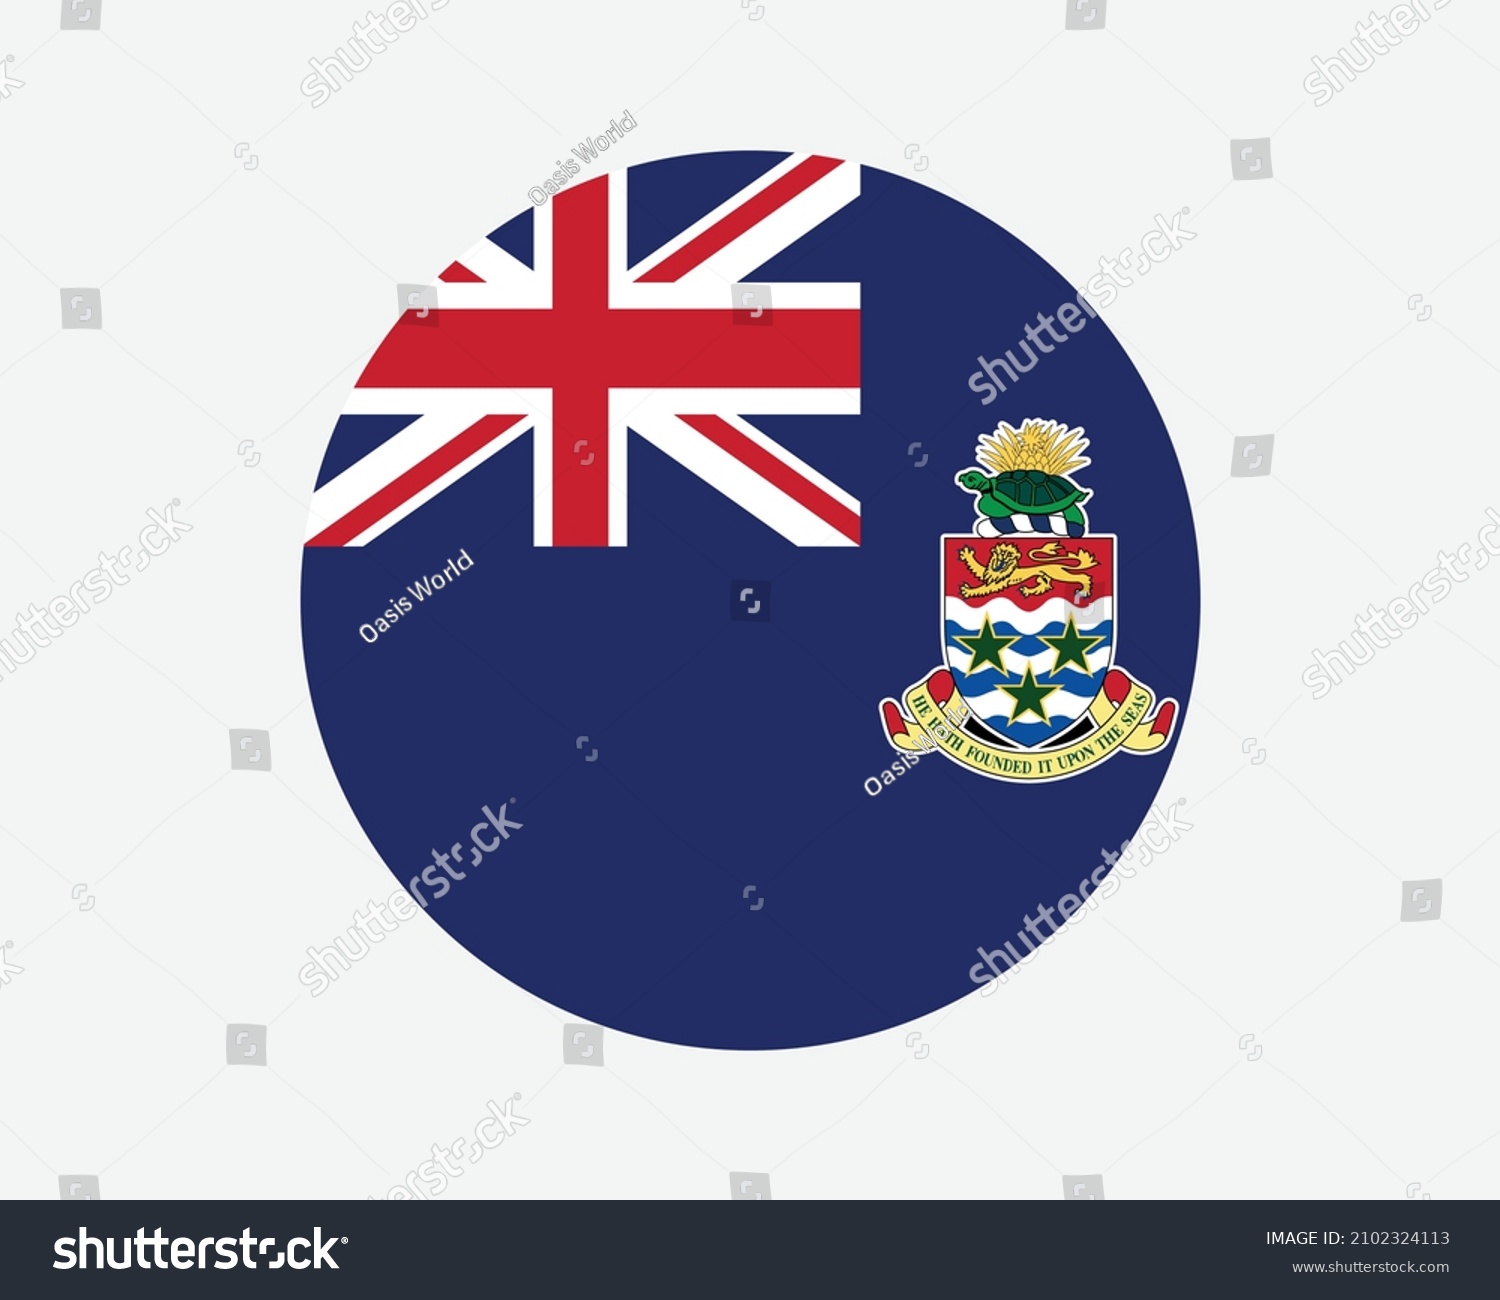 SVG of Cayman Islands Round Flag. Cayman Islands Circle Flag. British Overseas Territory Circular Shape Button Banner. EPS Vector Illustration. svg